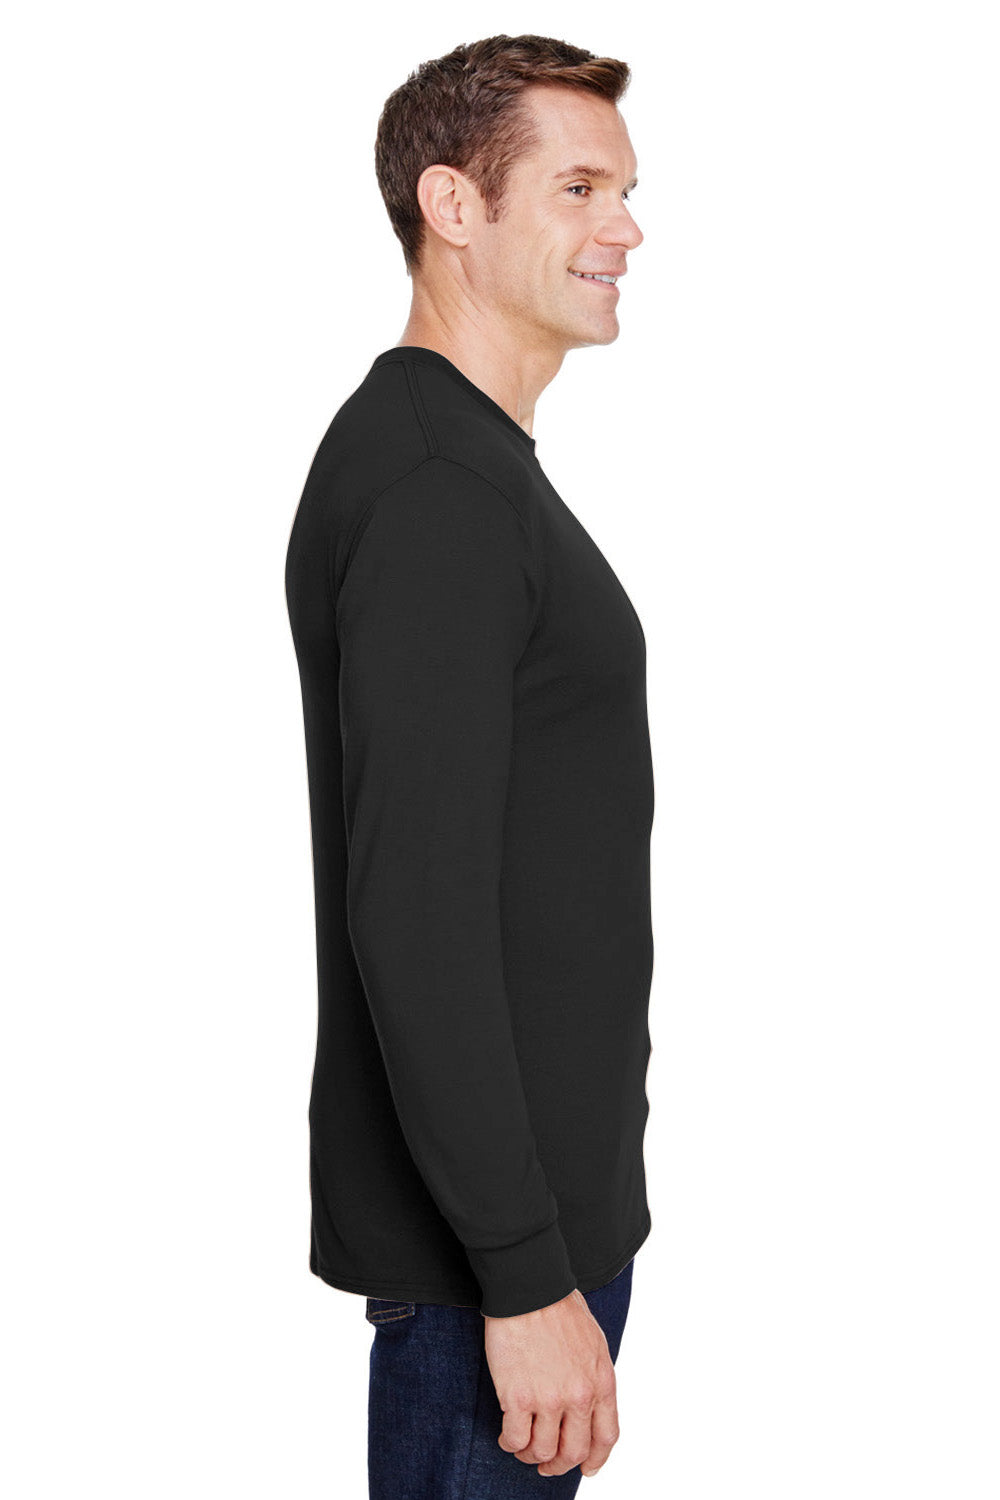 Hanes W120 Mens Workwear Long Sleeve Crewneck T-Shirt w/ Pocket Black Side